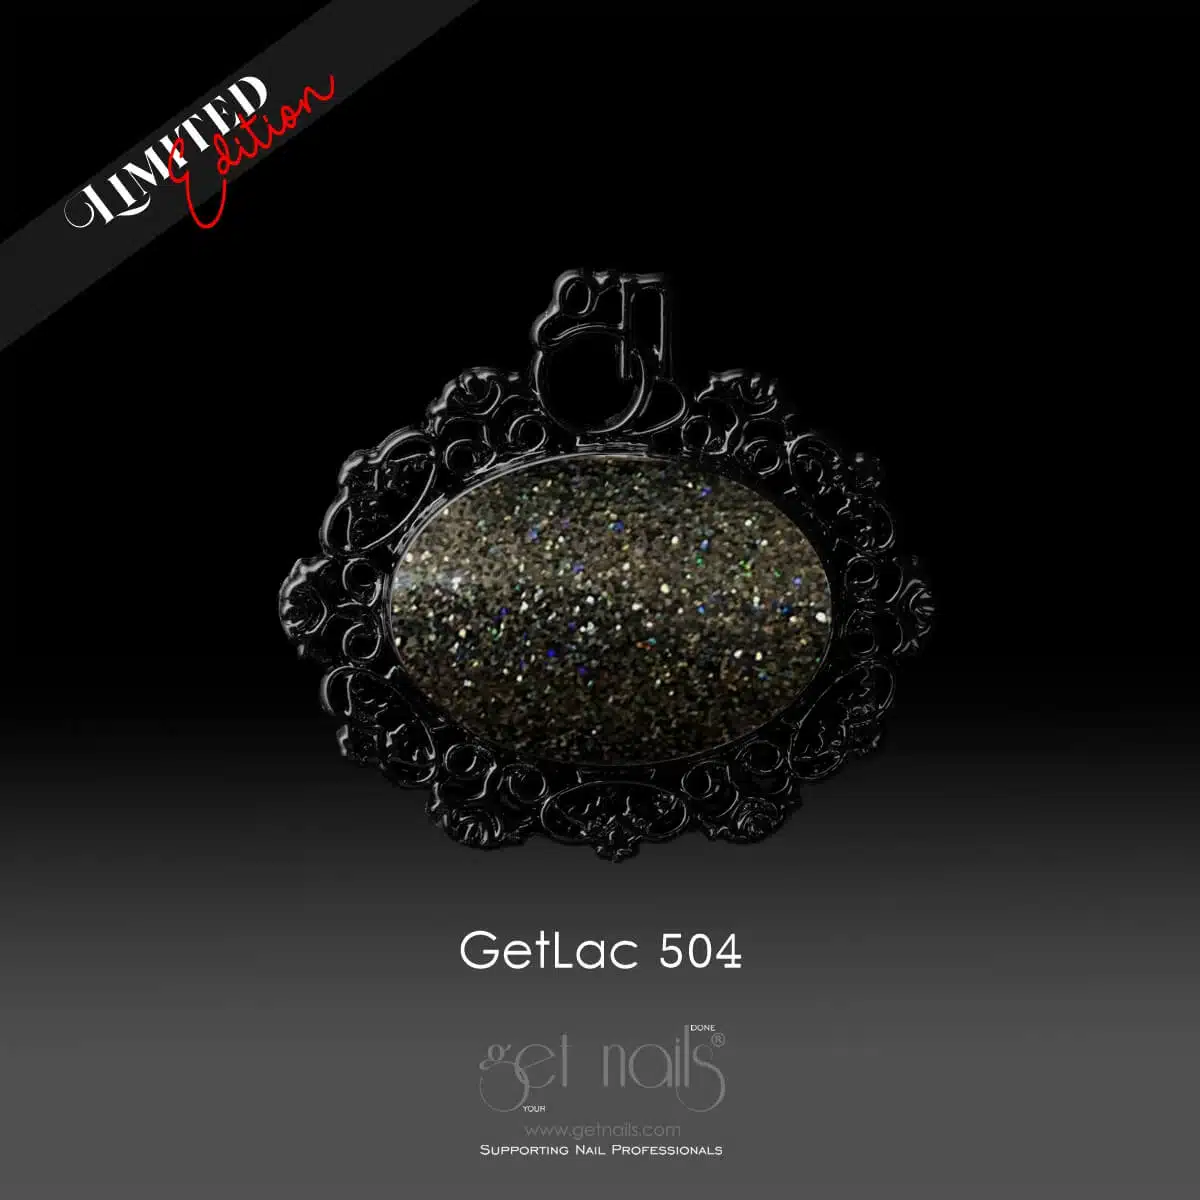 Get Nails Austria - GetLac 504 15 g